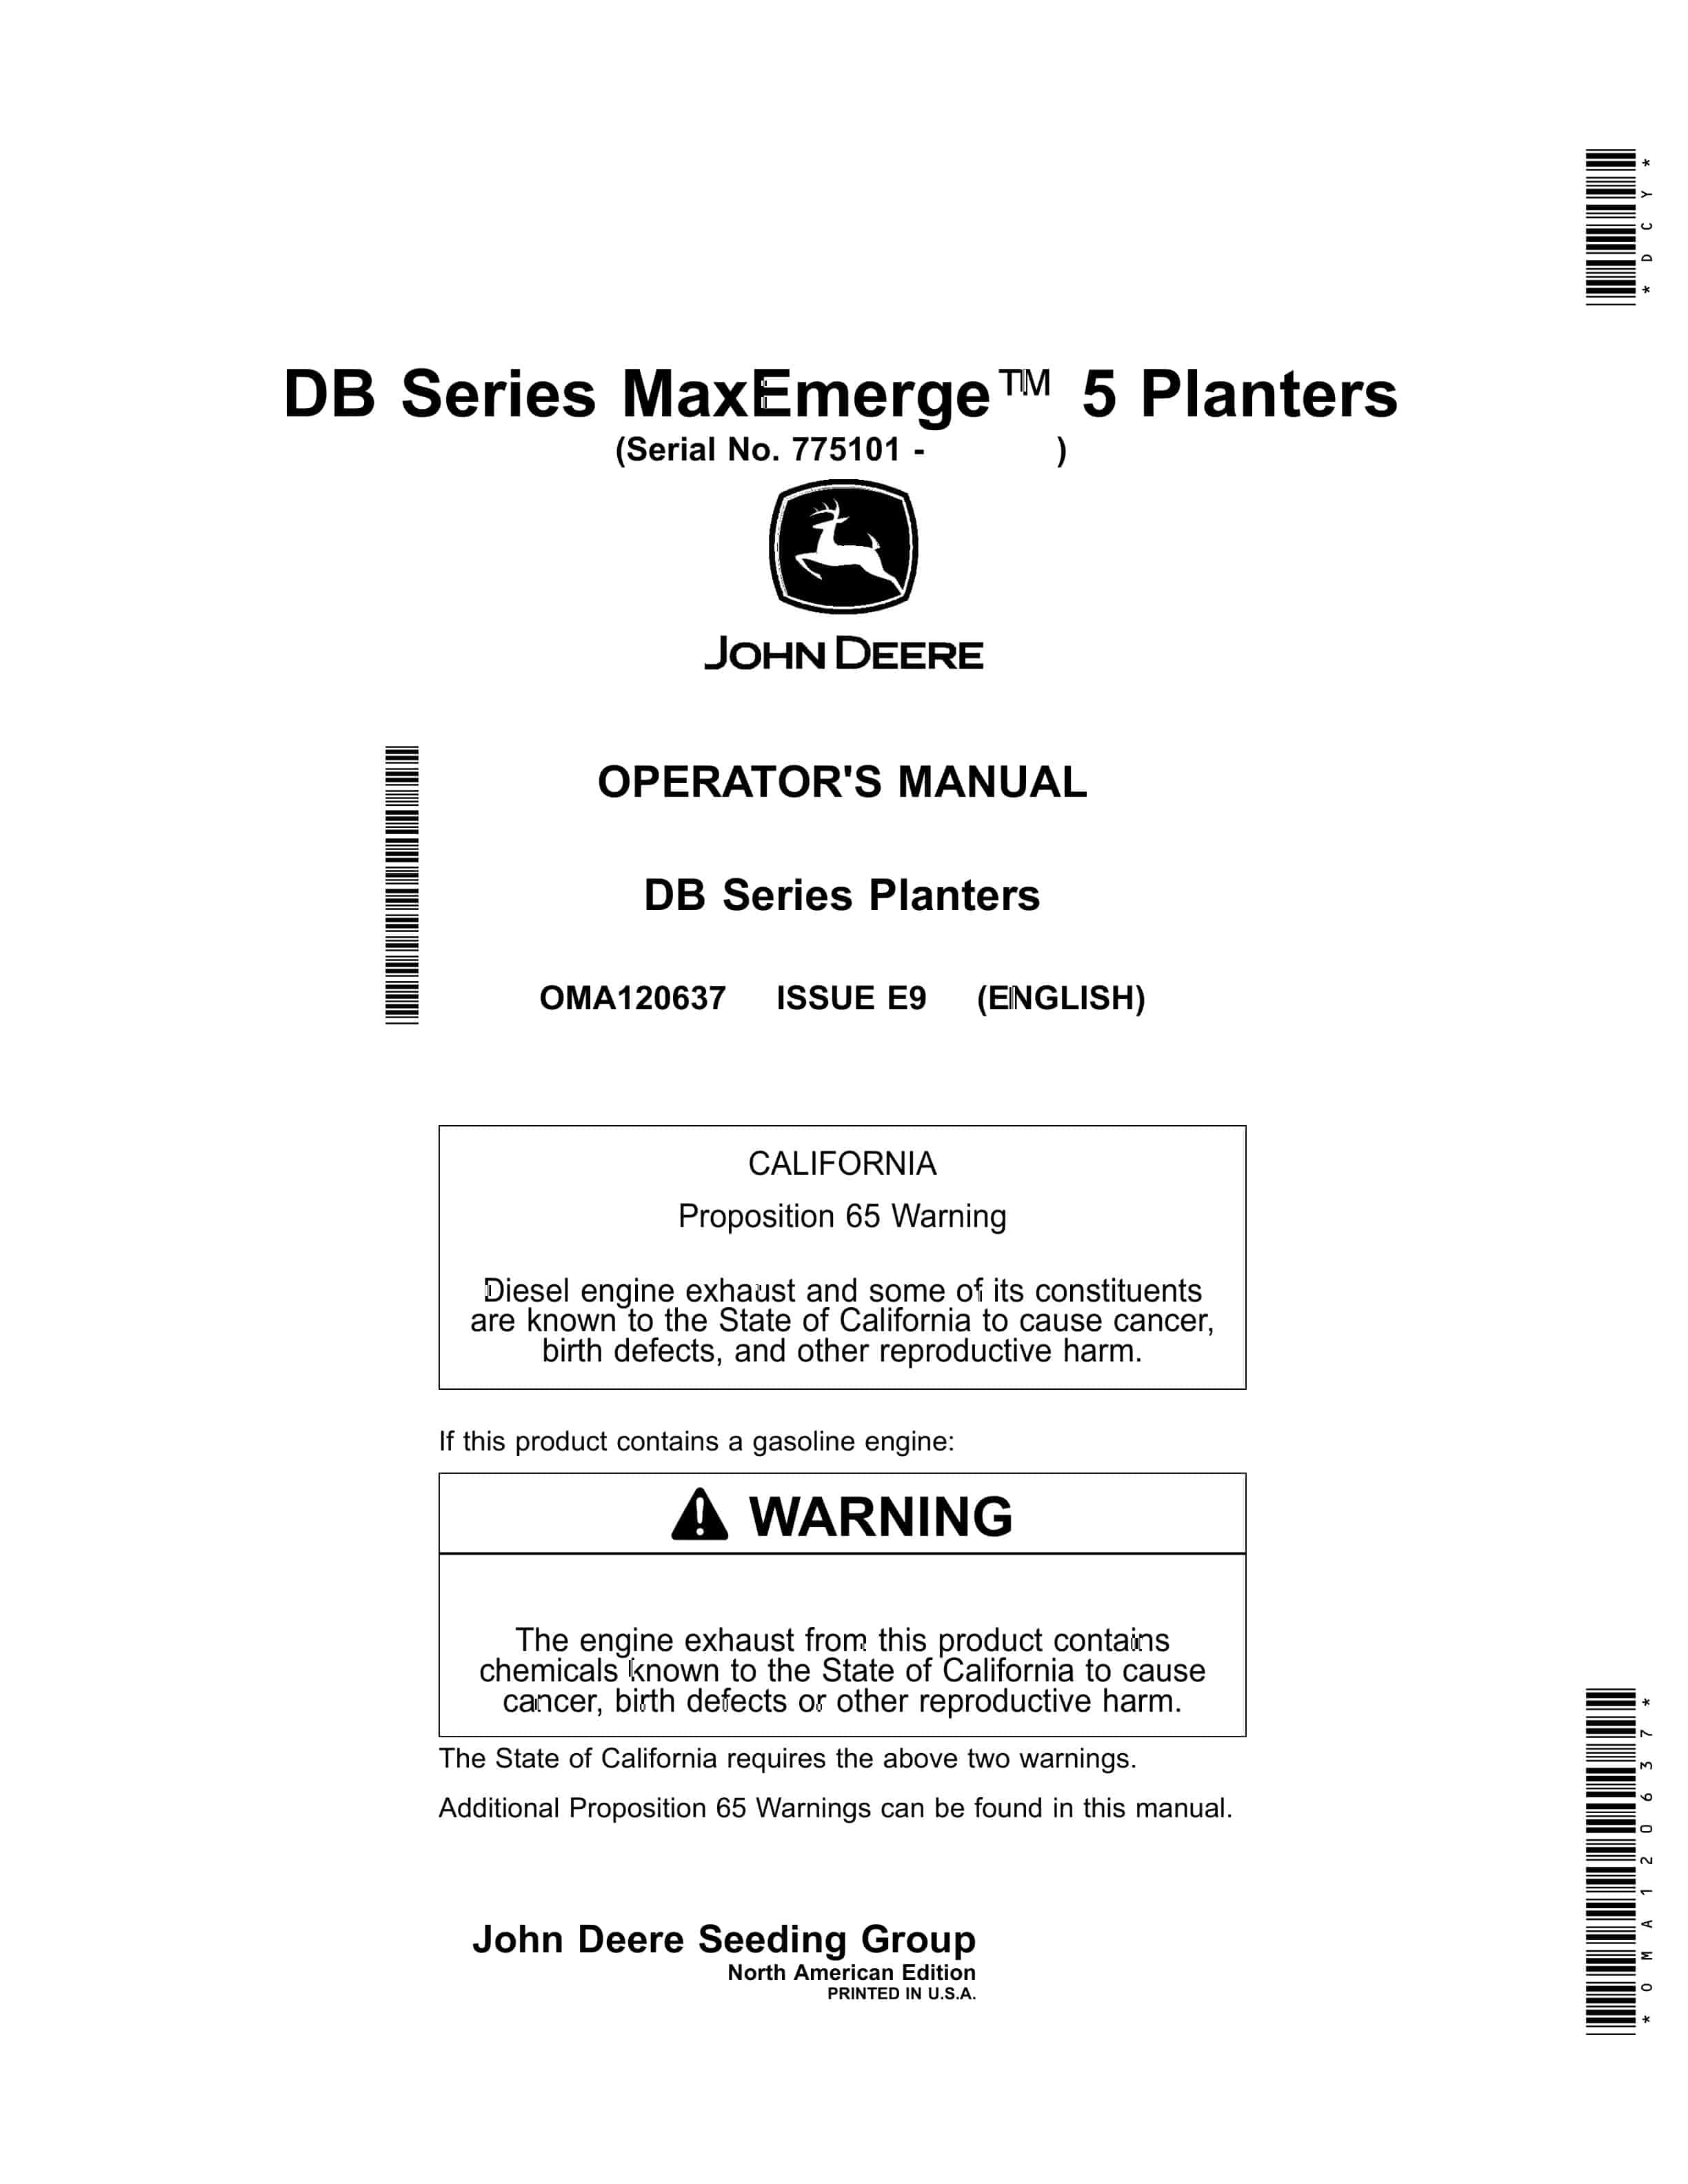 John Deere DB Series MaxEmerge 5 Planter Operator Manual OMA120637 1